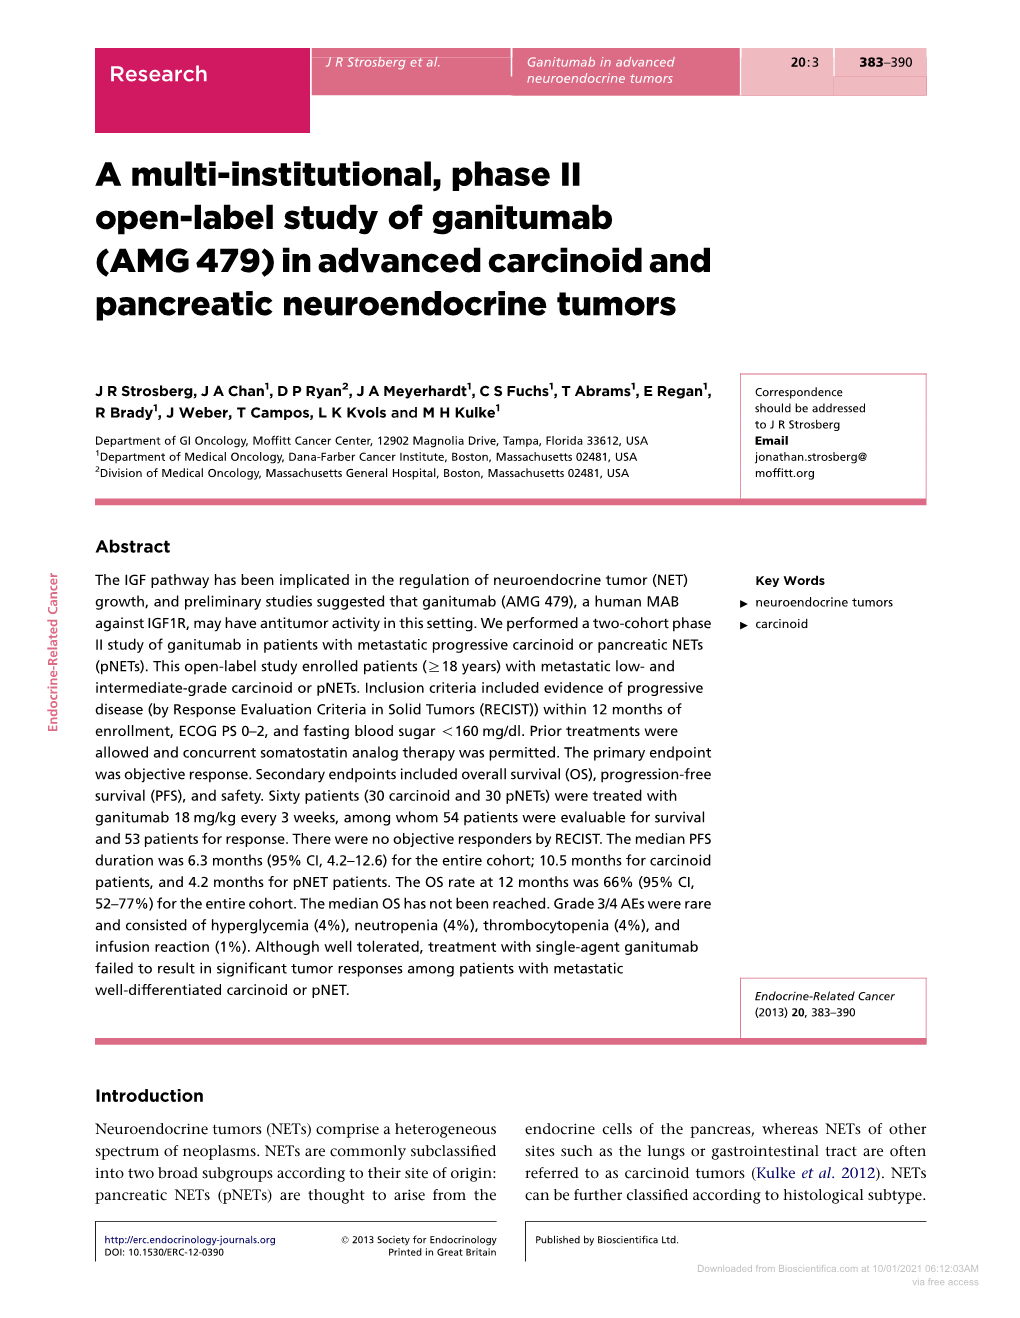 In Advanced Carcinoid and Pancreatic Neuroendocrine Tumors